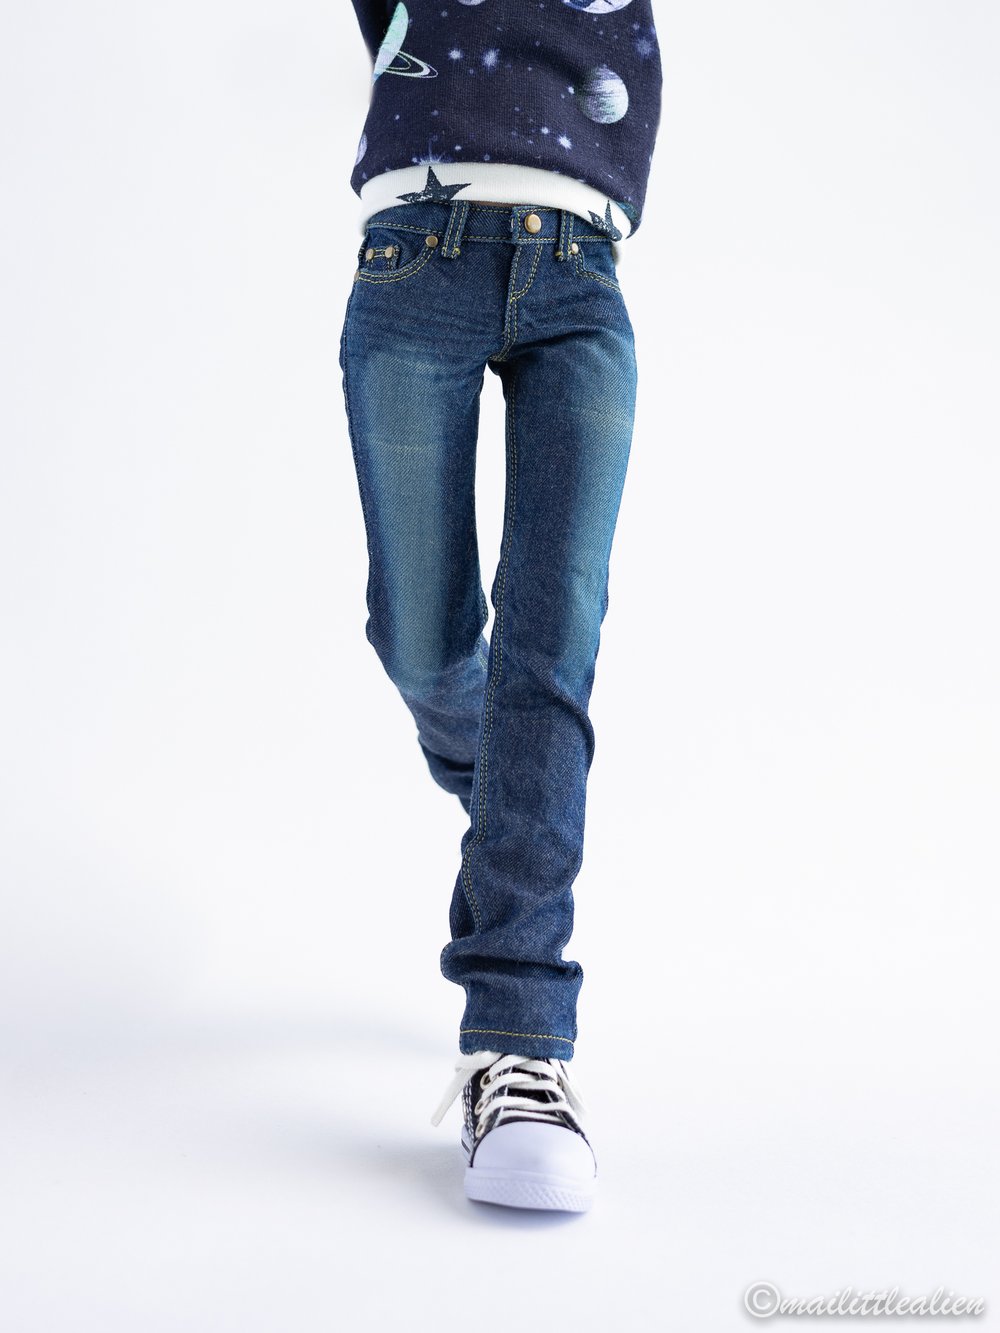 jeans-dark-4.jpg